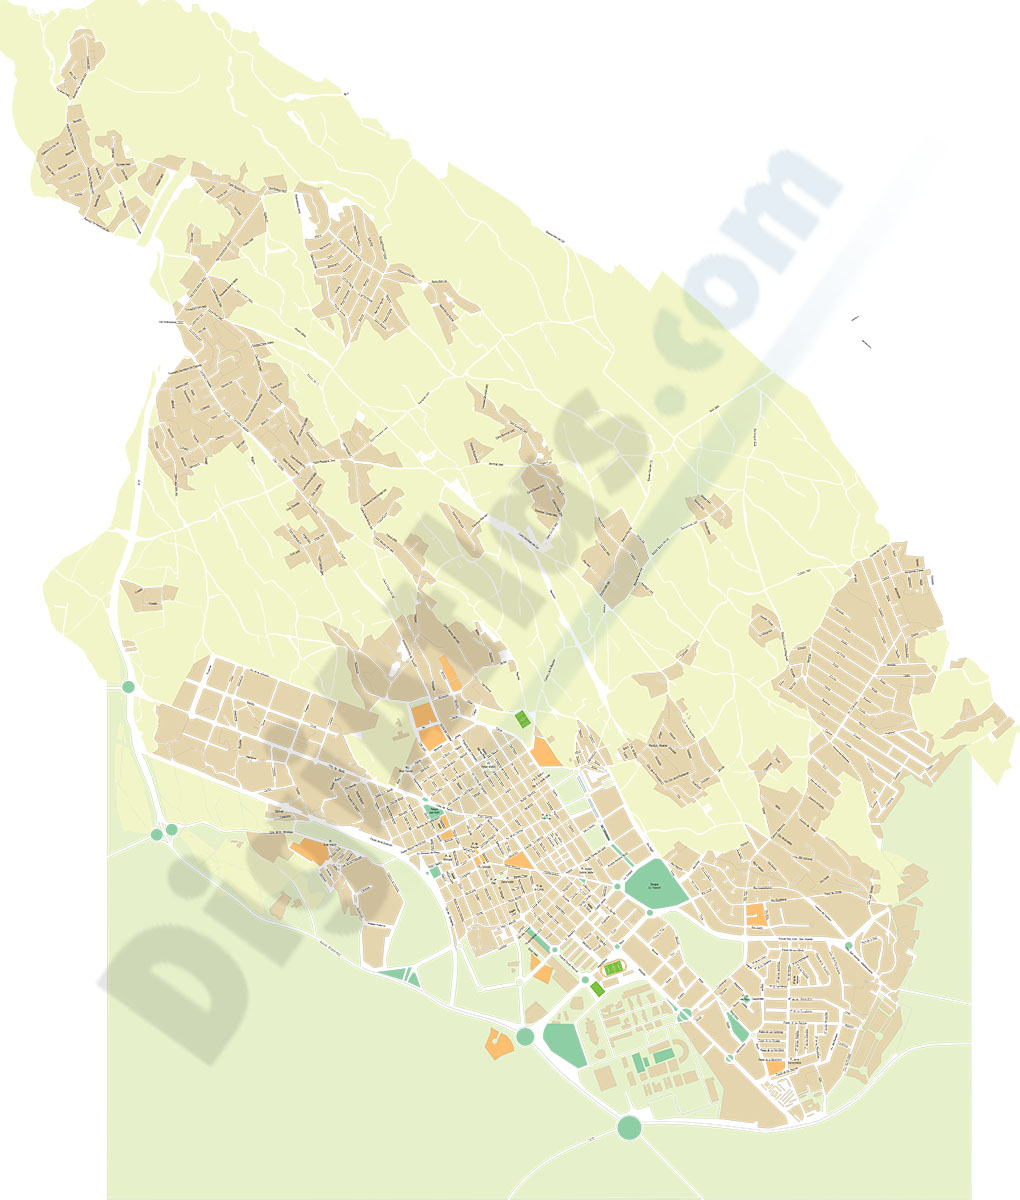 San Vicente del Raspeig (Alicante) - city map